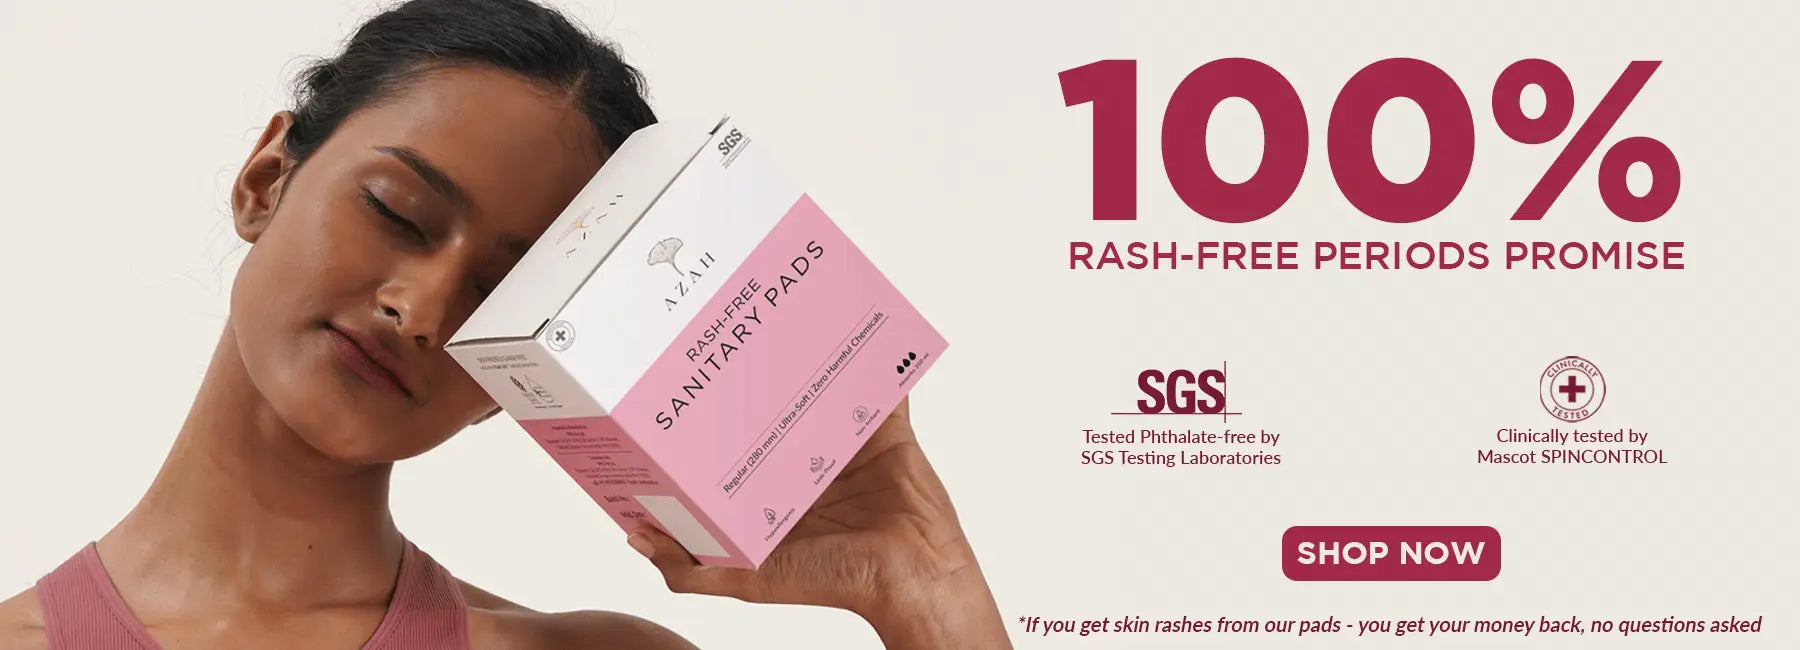 100% rash free periods promise